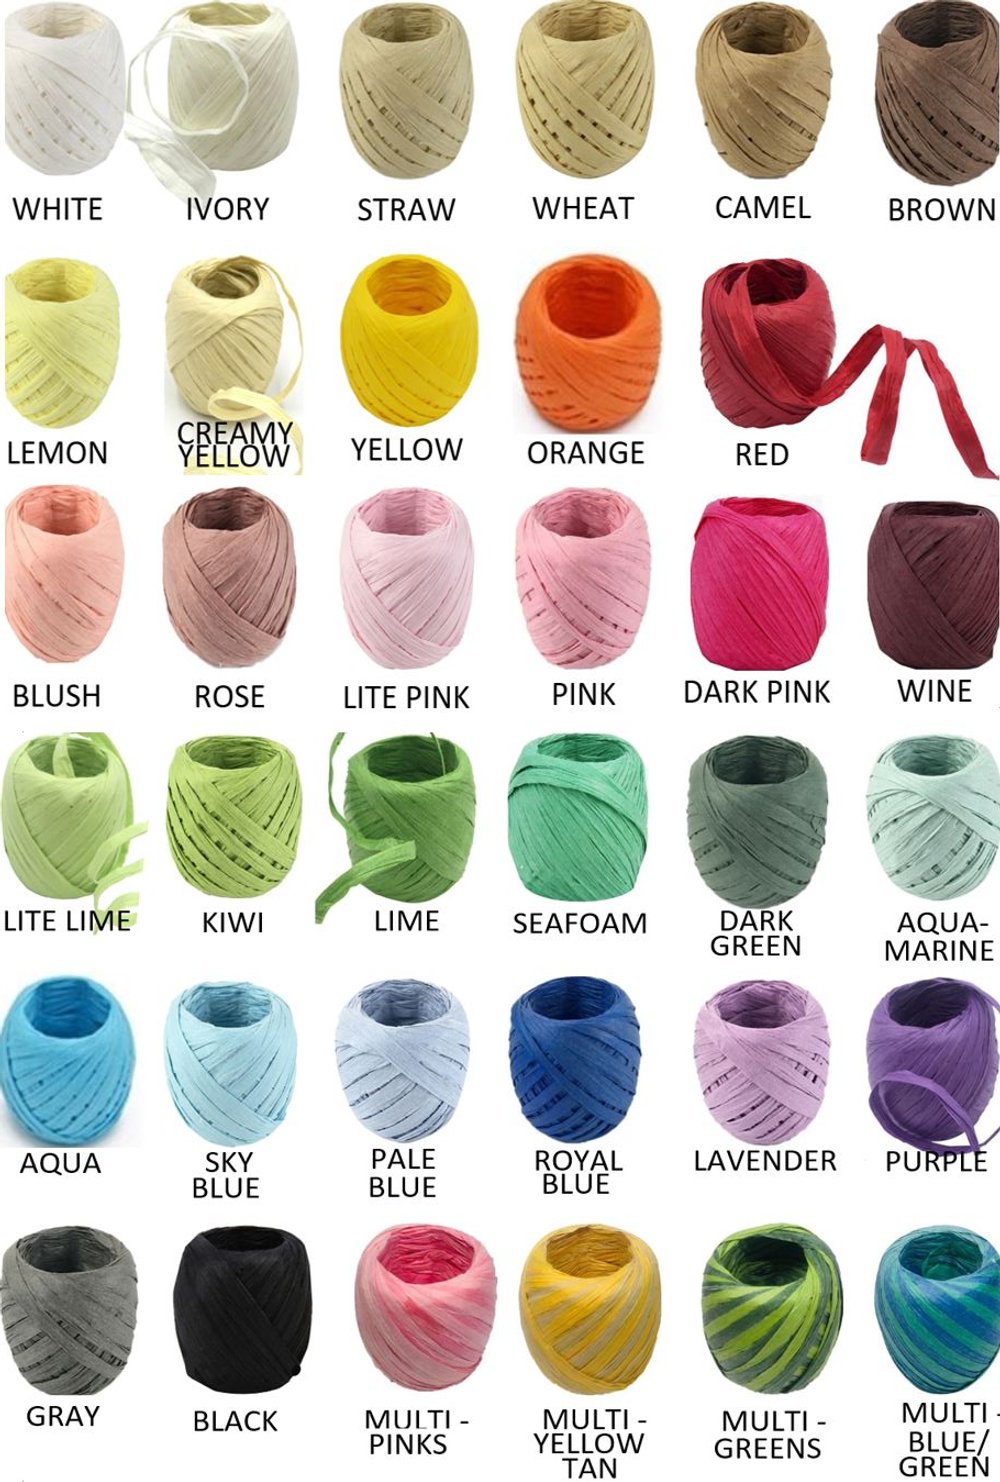 1 Ball Straw Rafiha Yarn For Making Summer Hat, Crocheting Bag, Diy Craft  Supplies